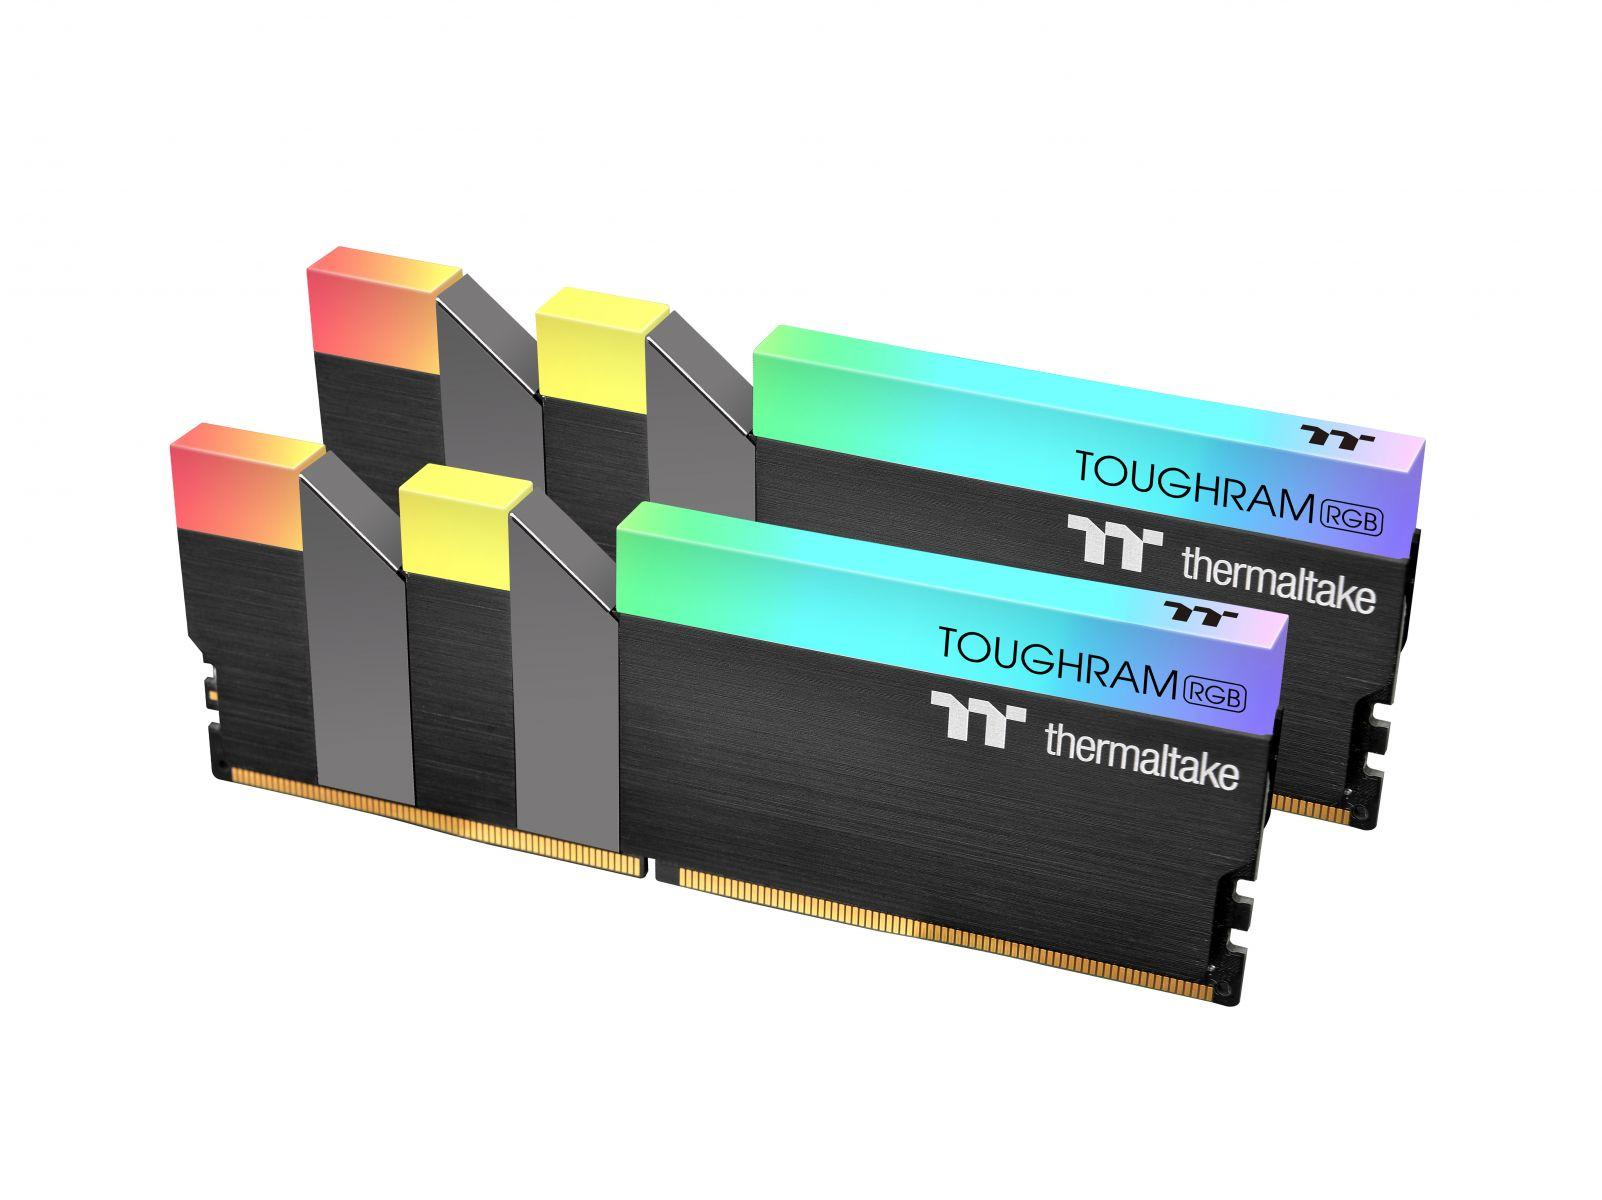 TOUGHRAM GB RGB THERMALTAKE 16 DDR4 Arbeitsspeicher